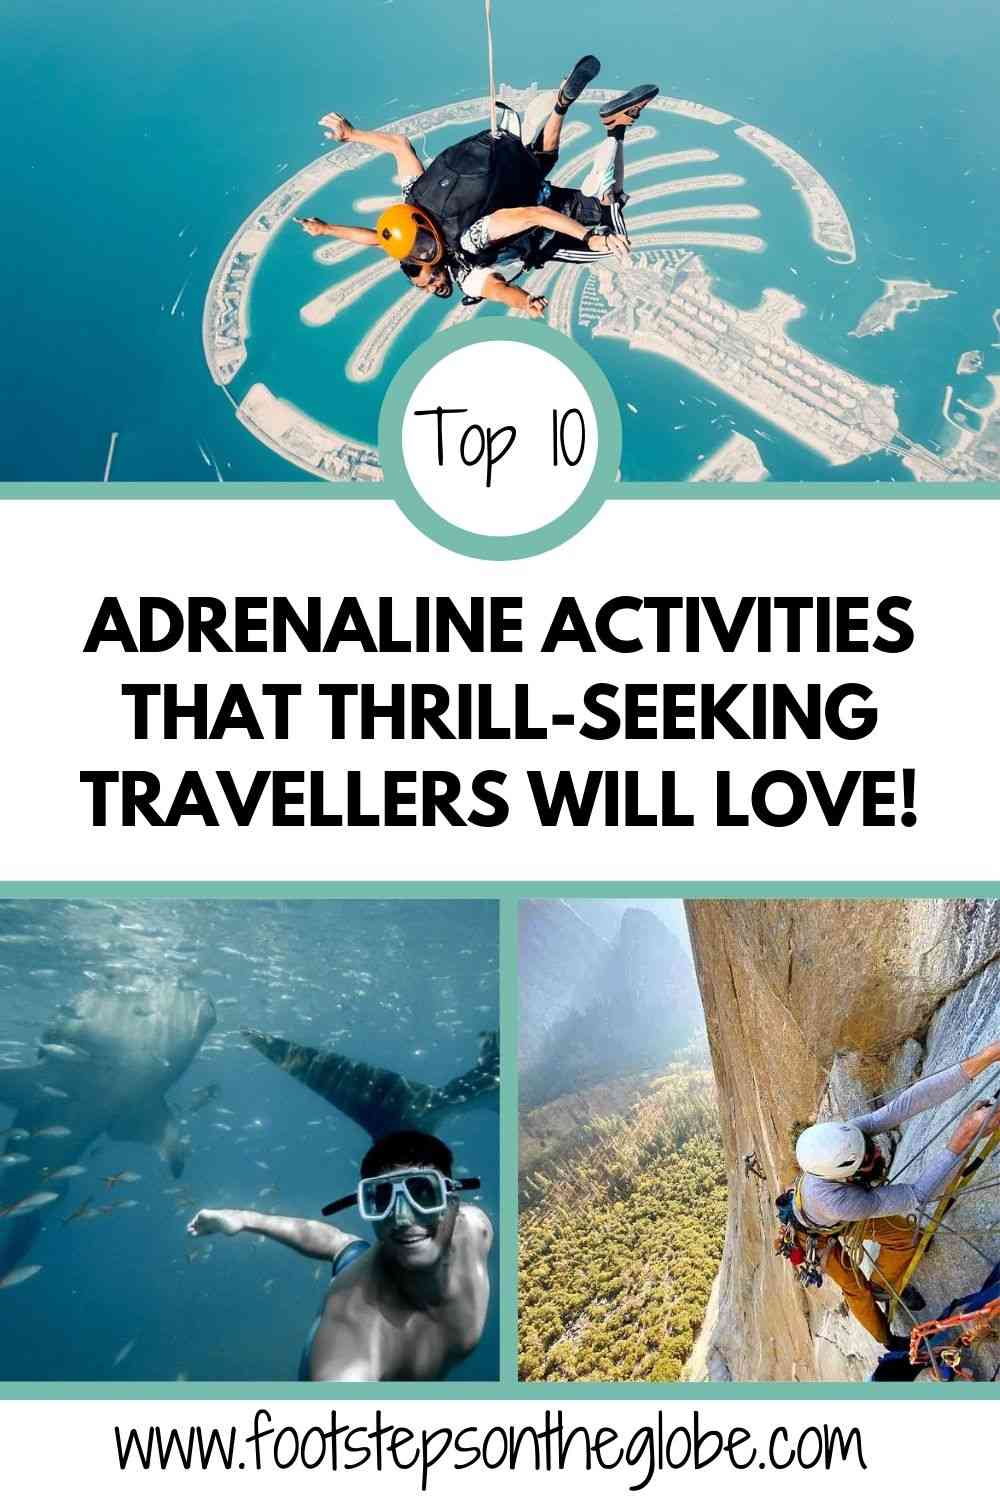 Top 10 adrenaline activities that thrill seeking travellers will love pinerest image